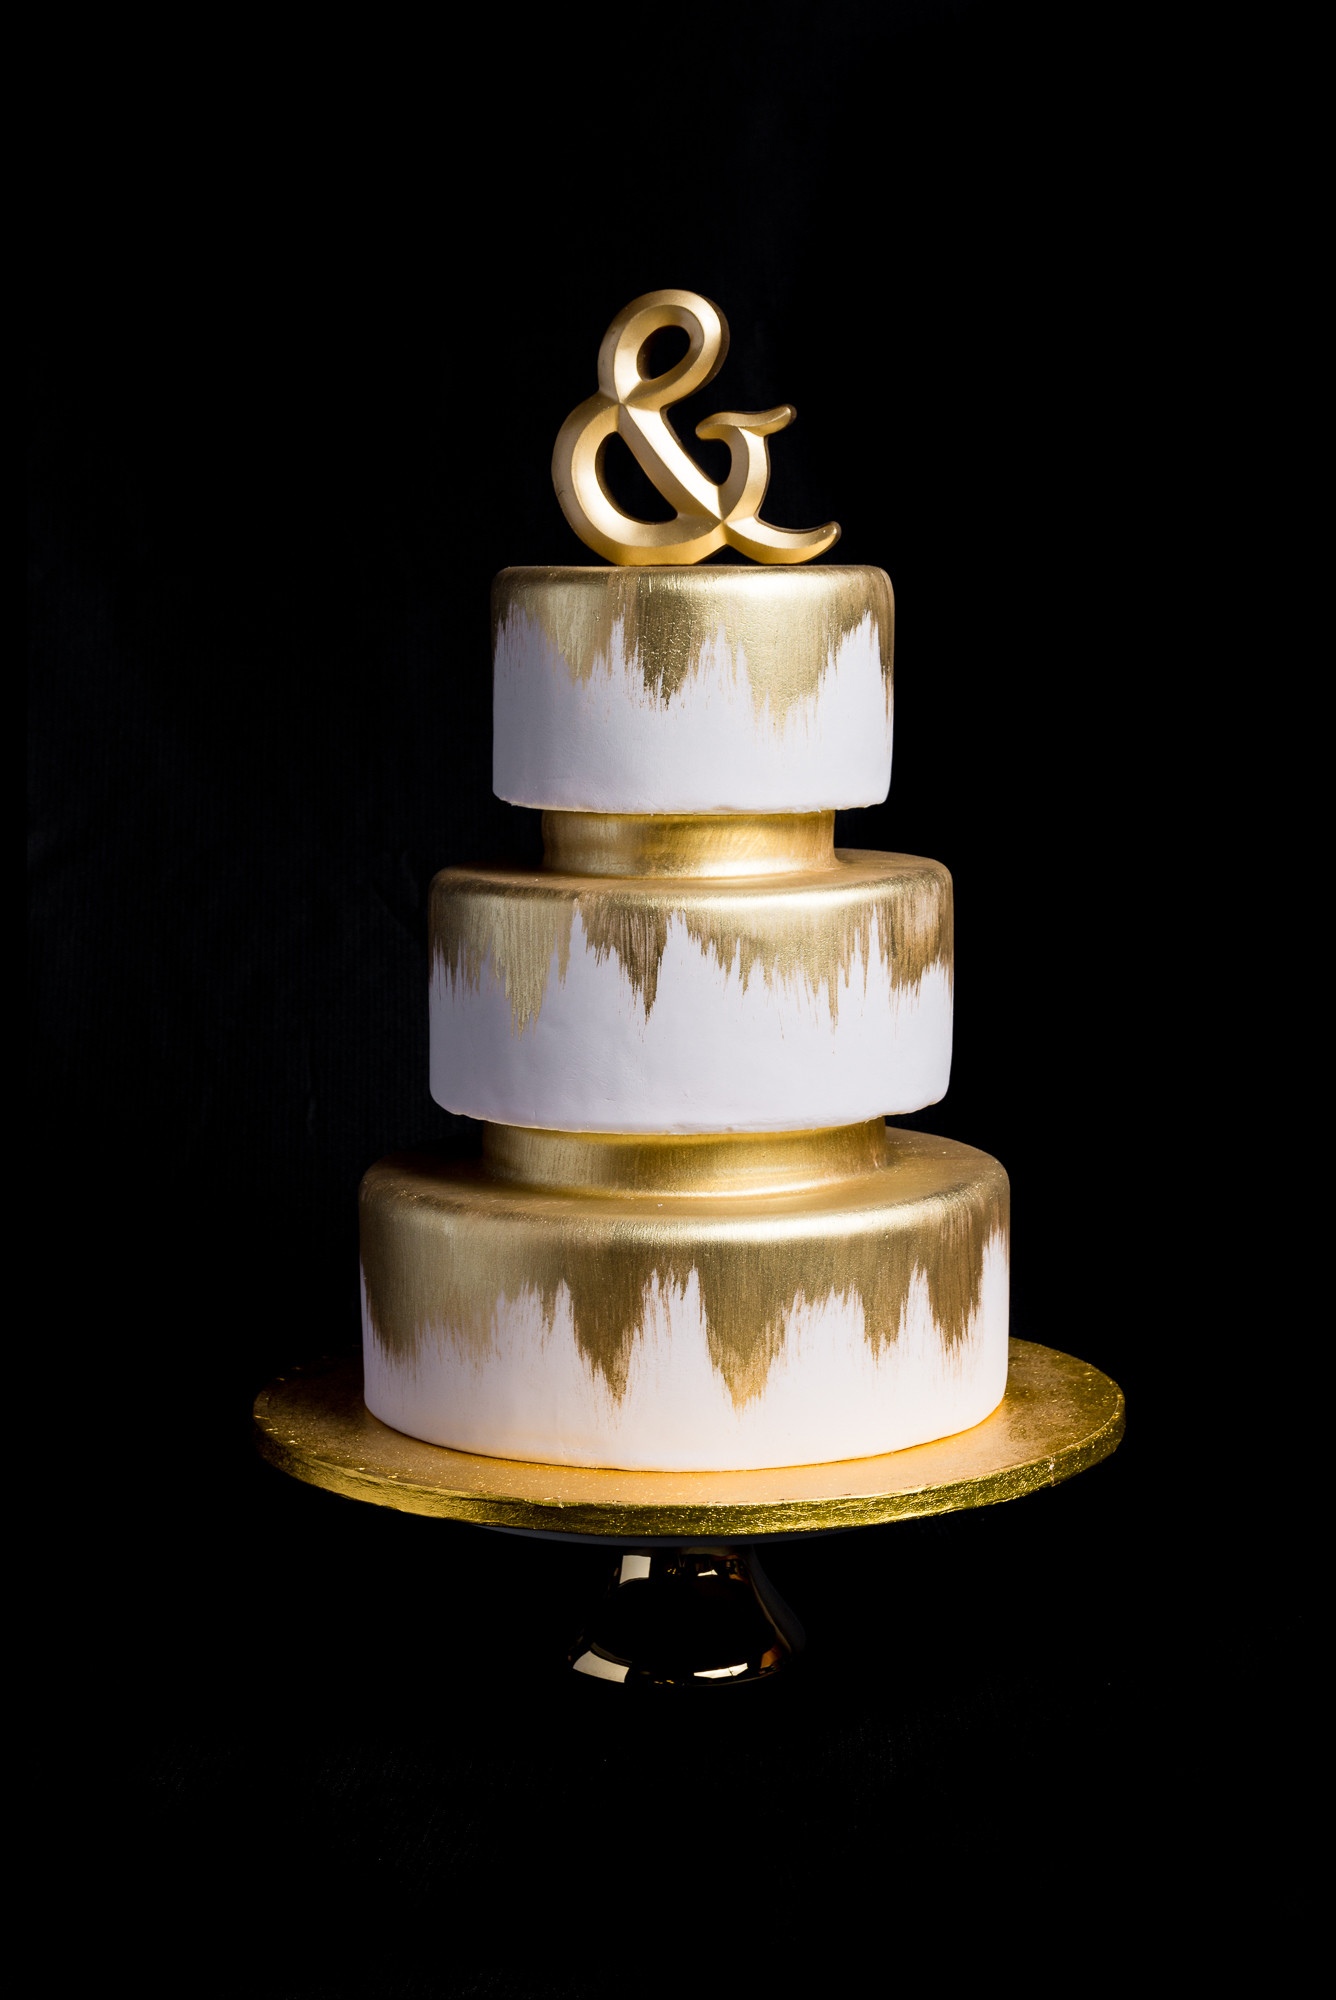 Acme Wedding Cakes the 20 Best Ideas for Wedding Cakes Cake Decorating